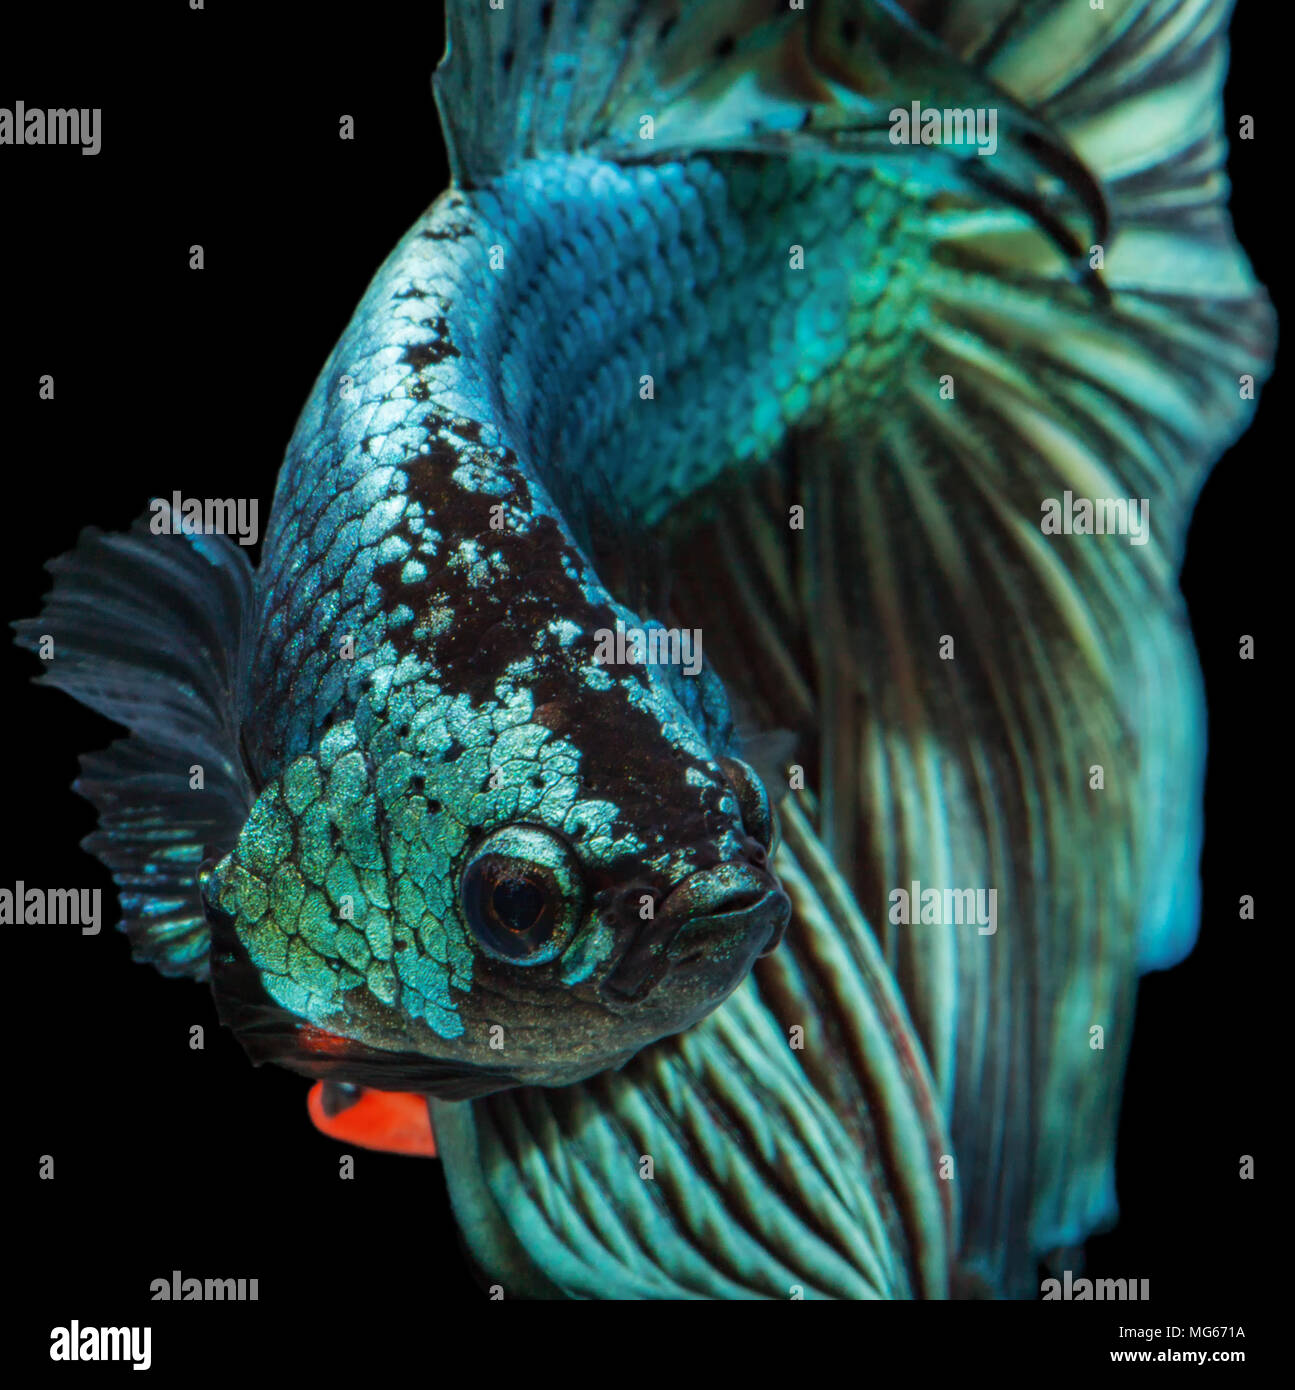 siamese fighting fish, betta fish 'Half moon' isolated on black background Stock Photo